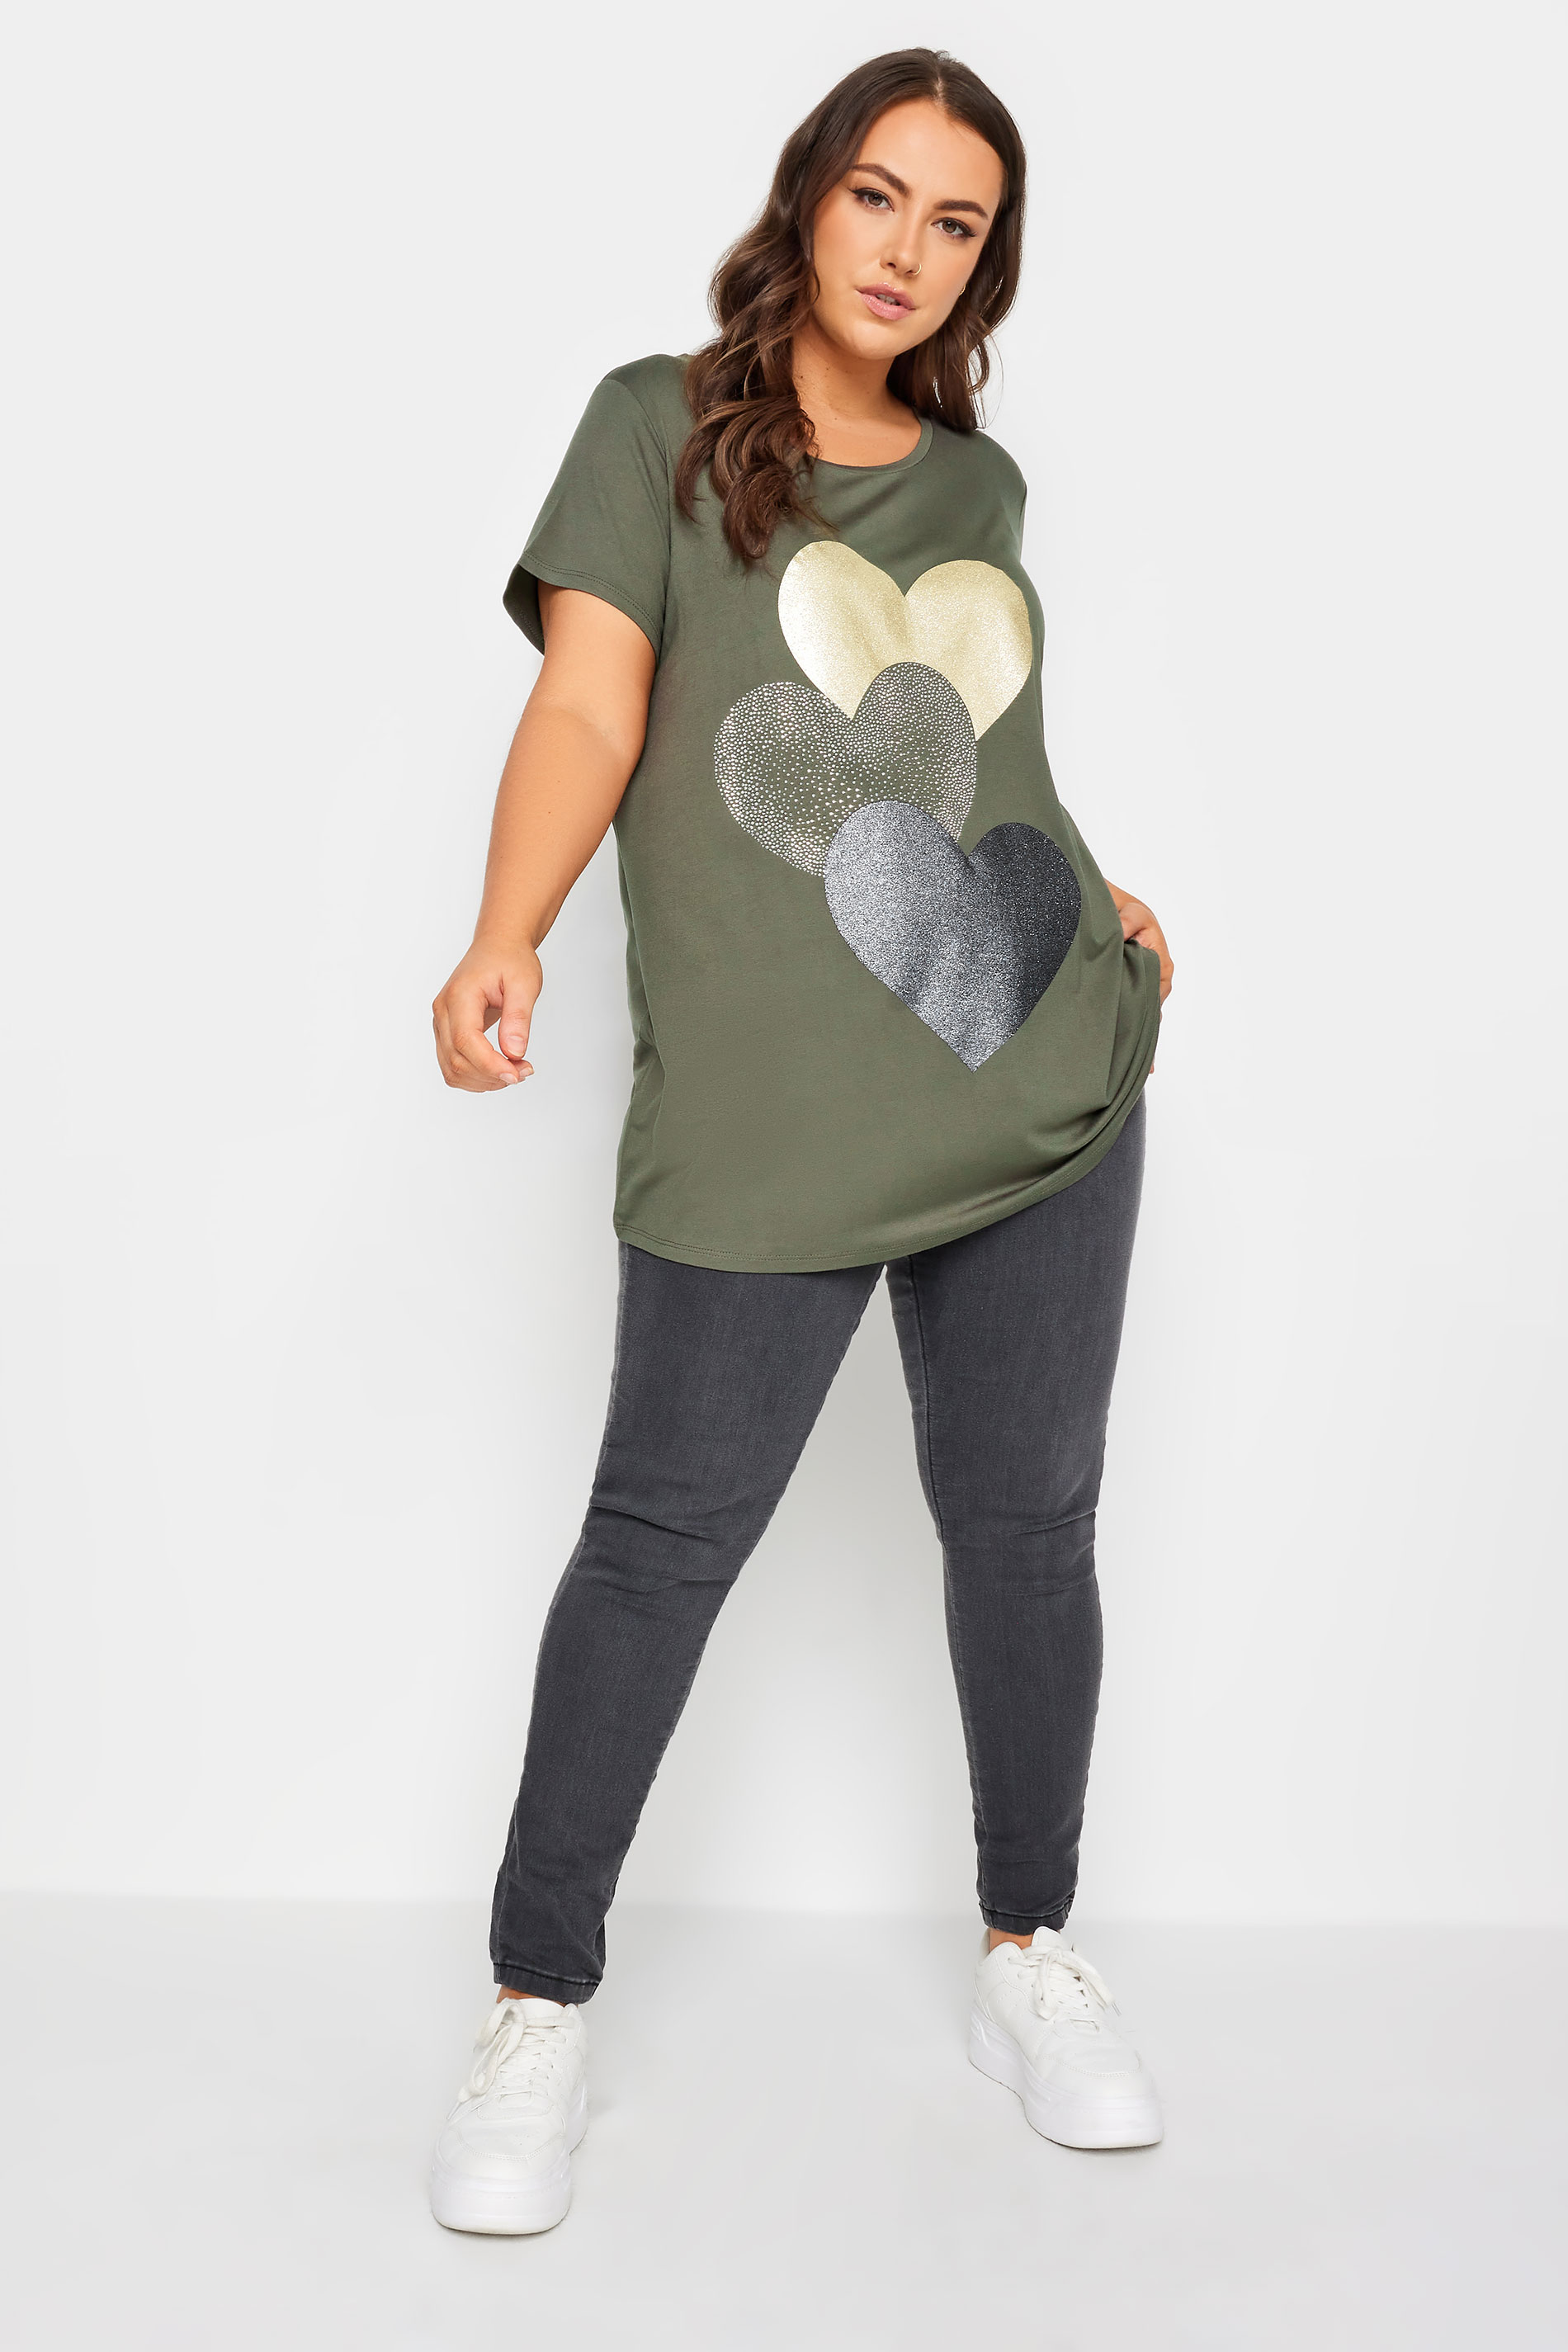 YOURS Plus Size Khaki Green Glitter Heart Print T-Shirt | Yours Clothing  2